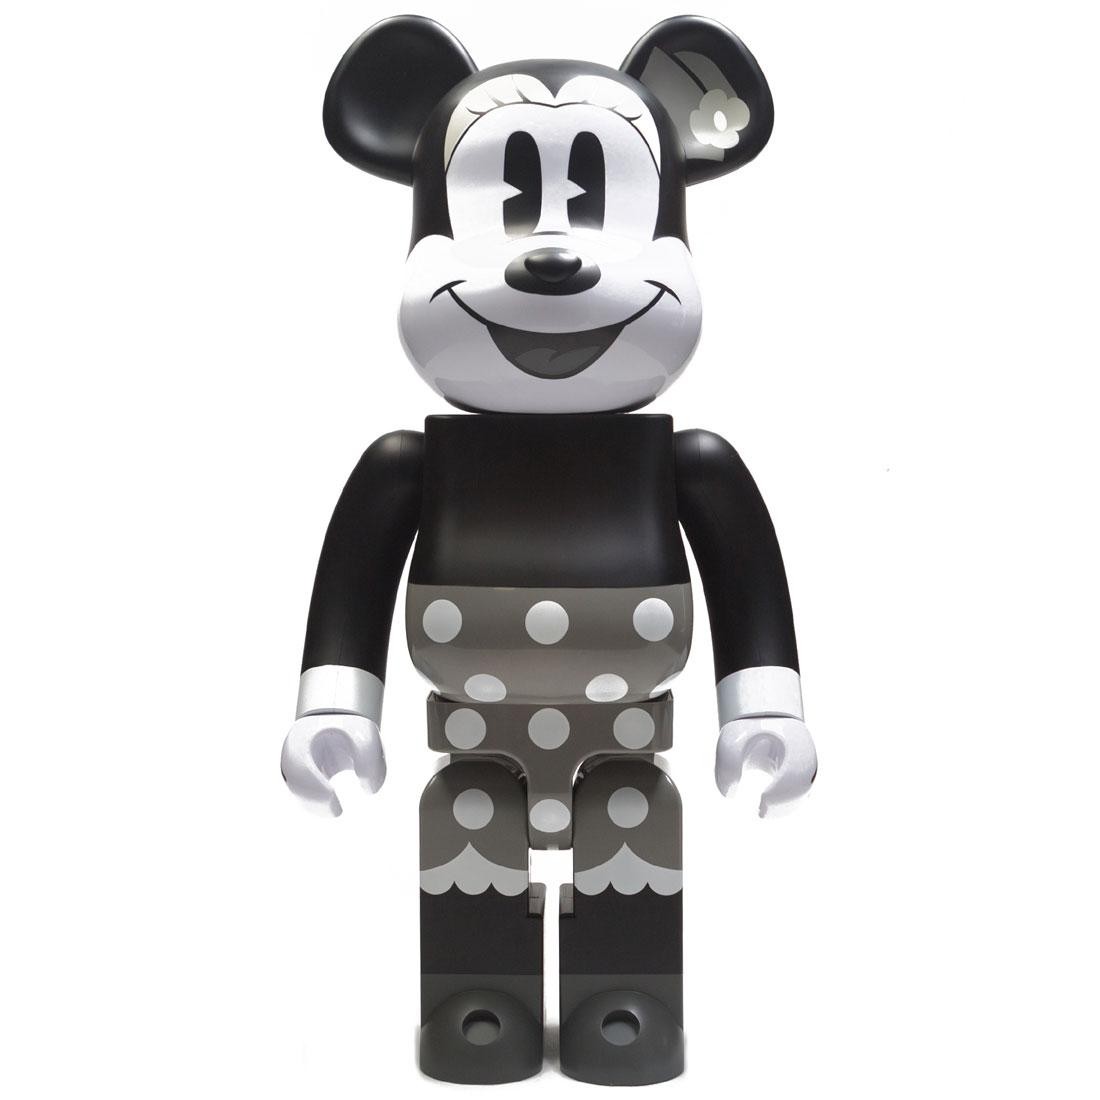 Medicom Disney Minnie Mouse Black And White Ver 1000% Bearbrick Figure  (black / white)